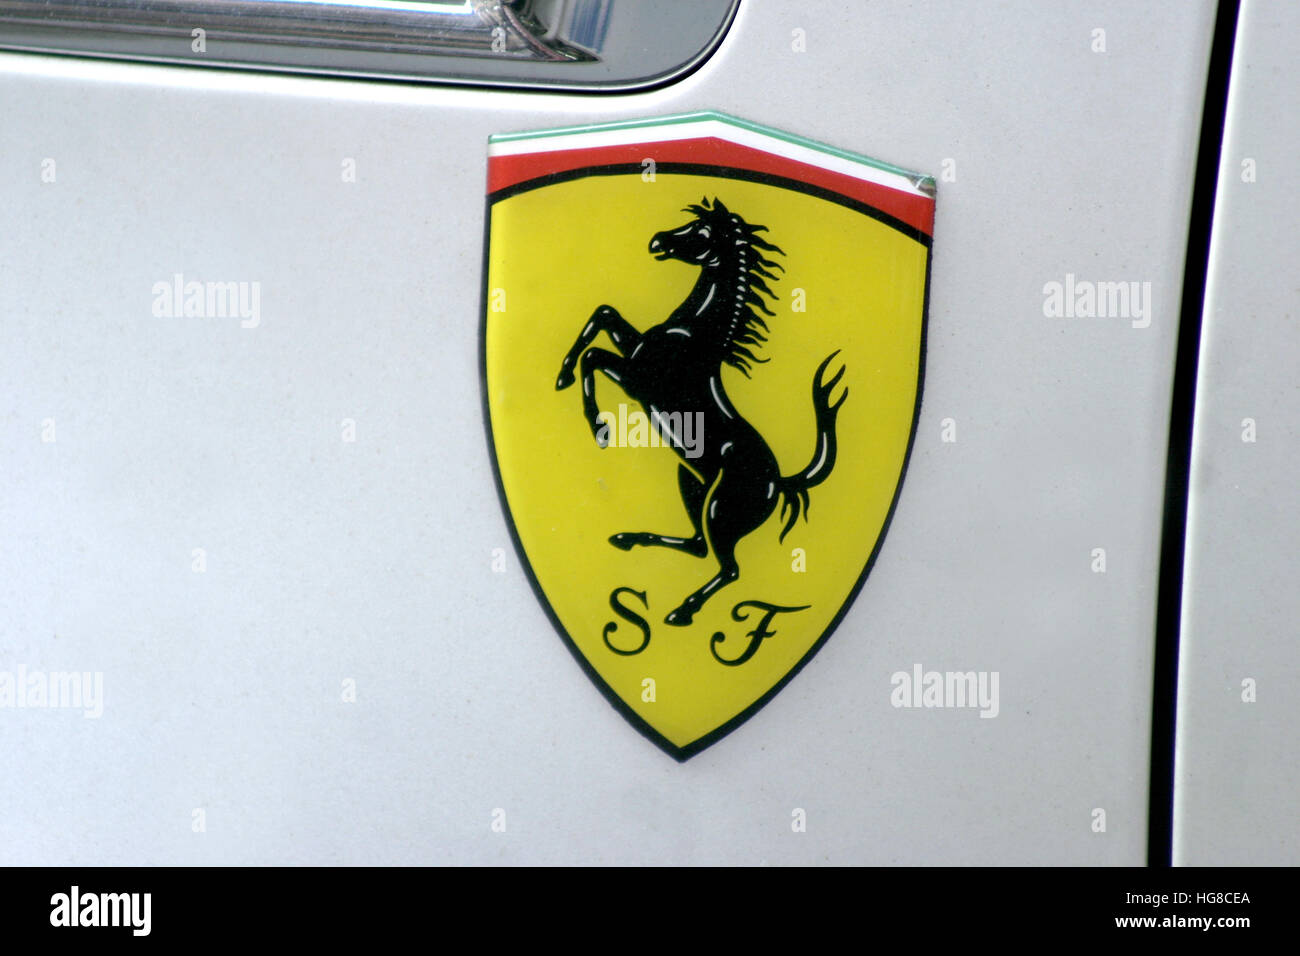 Ferrari logo on vehicle Stock Photo